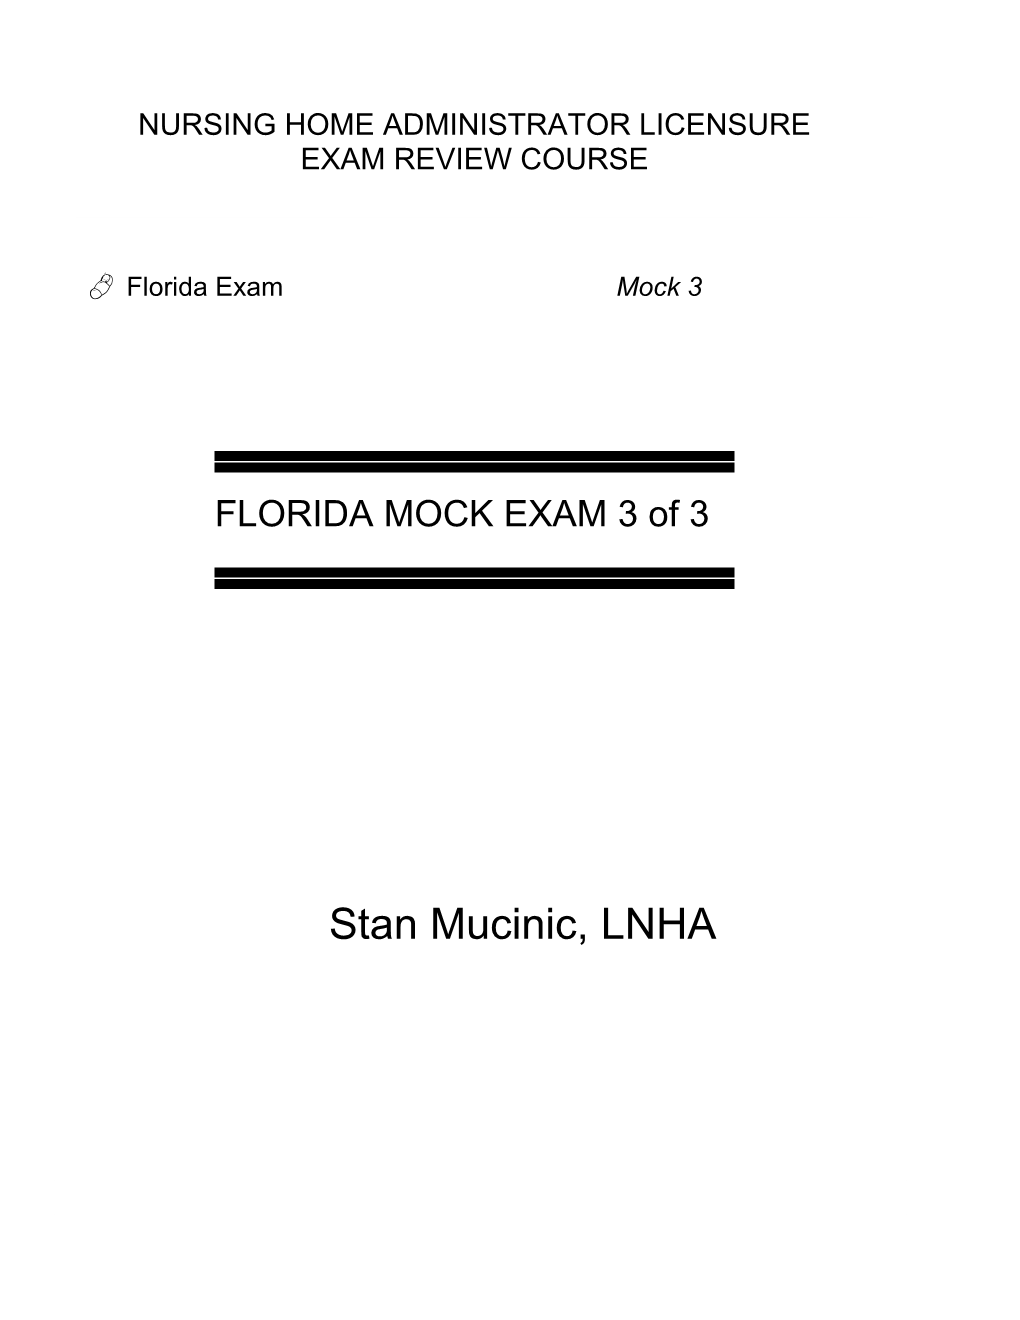 Florida Exam Mock 3